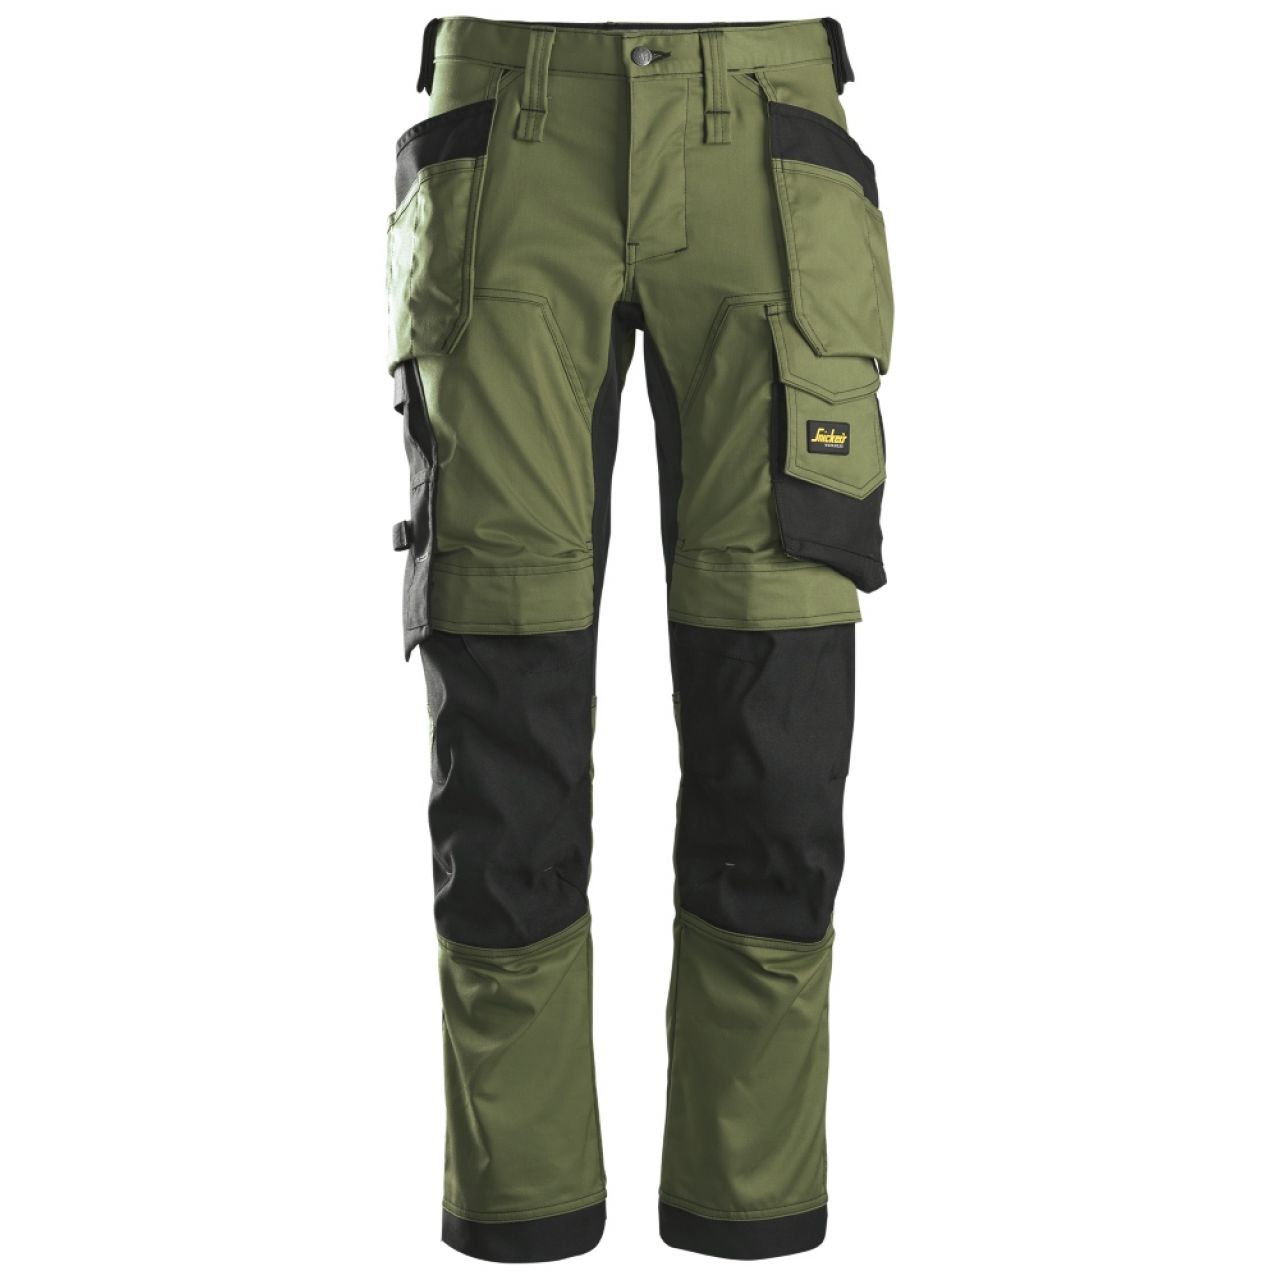 6241 Pantalones largos de trabajo elásticos con bolsillos flotantes AllroundWork verde khaki-negro talla 52